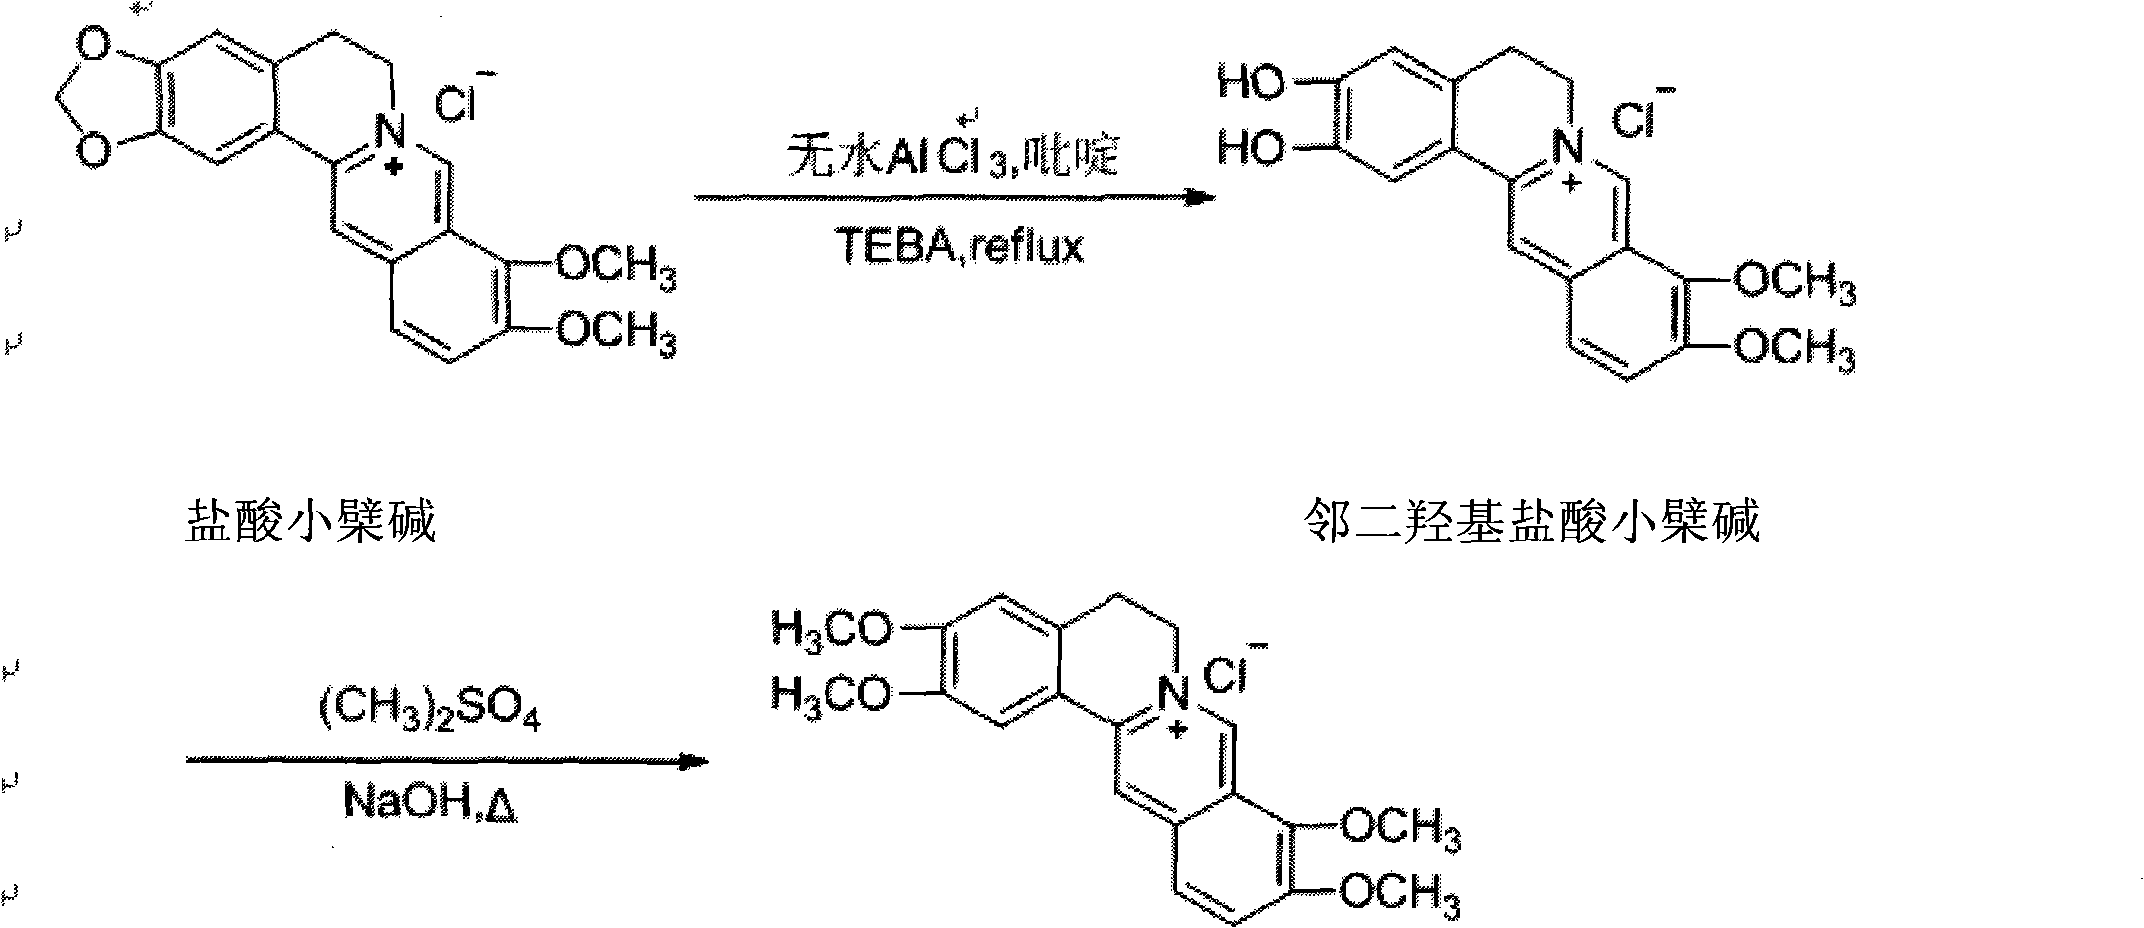 Fibriuretinin synthesis method